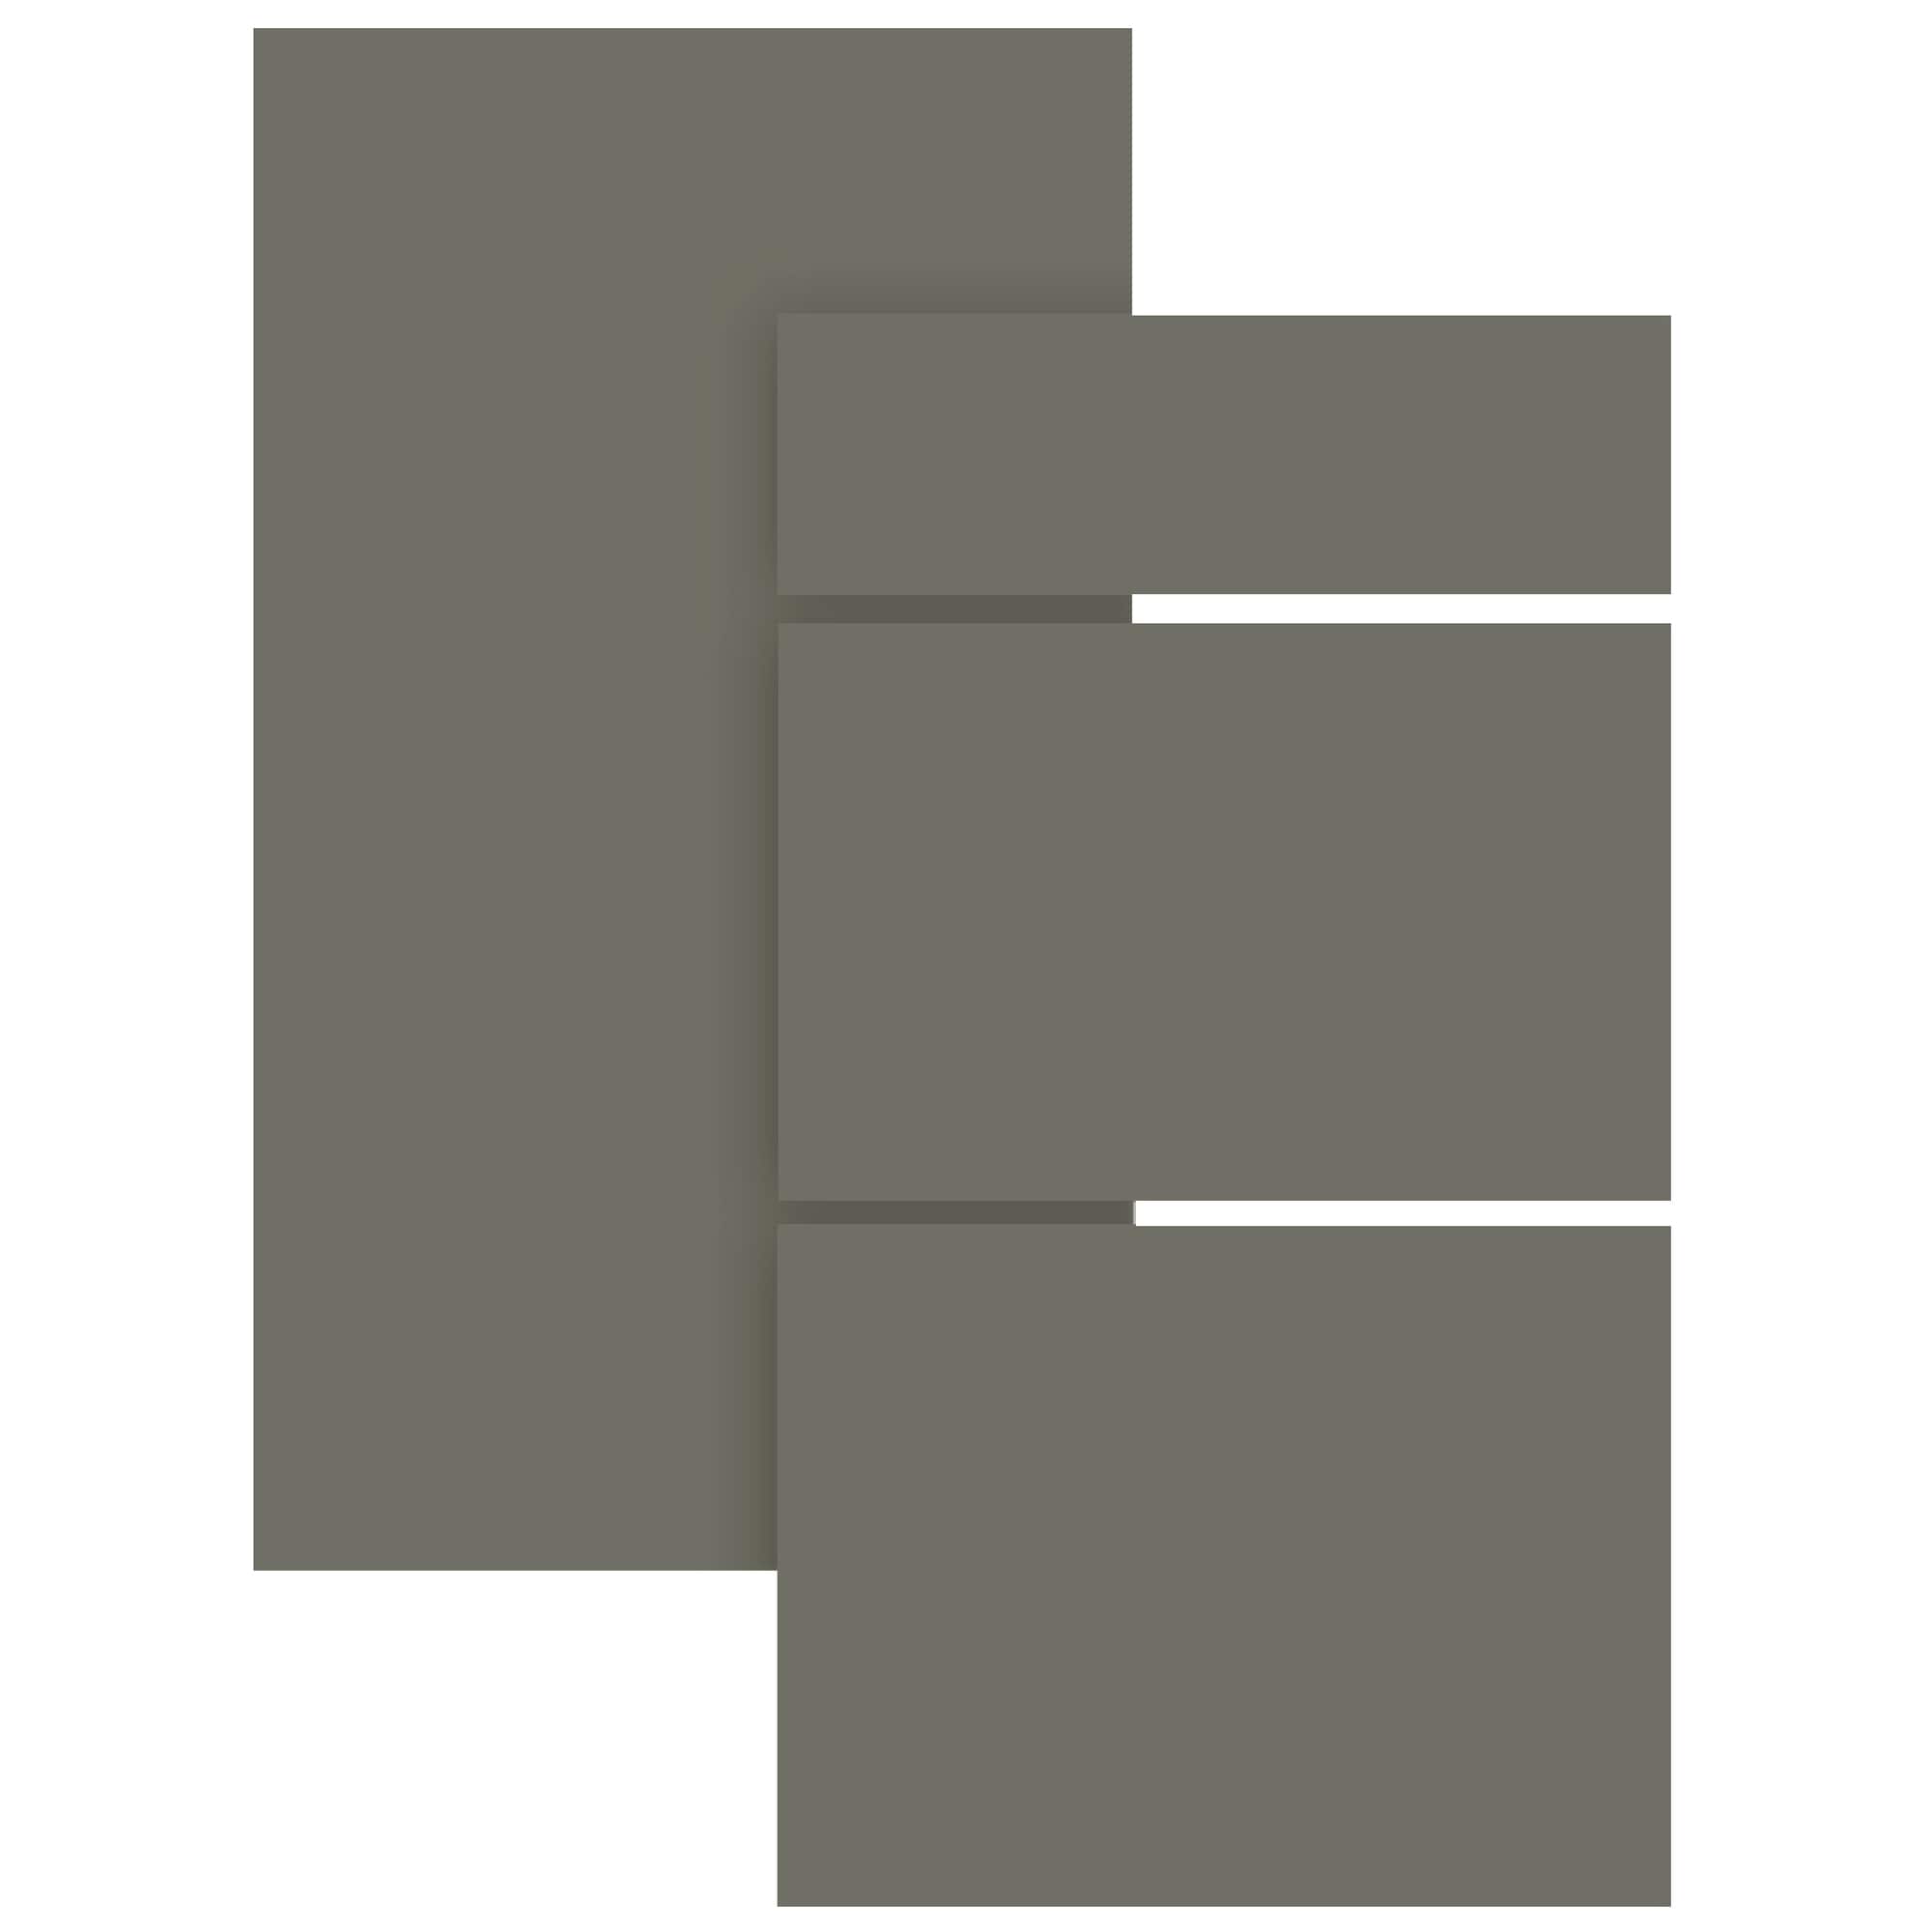 Epoq Trend Warm Grey vægpanel 96 cm